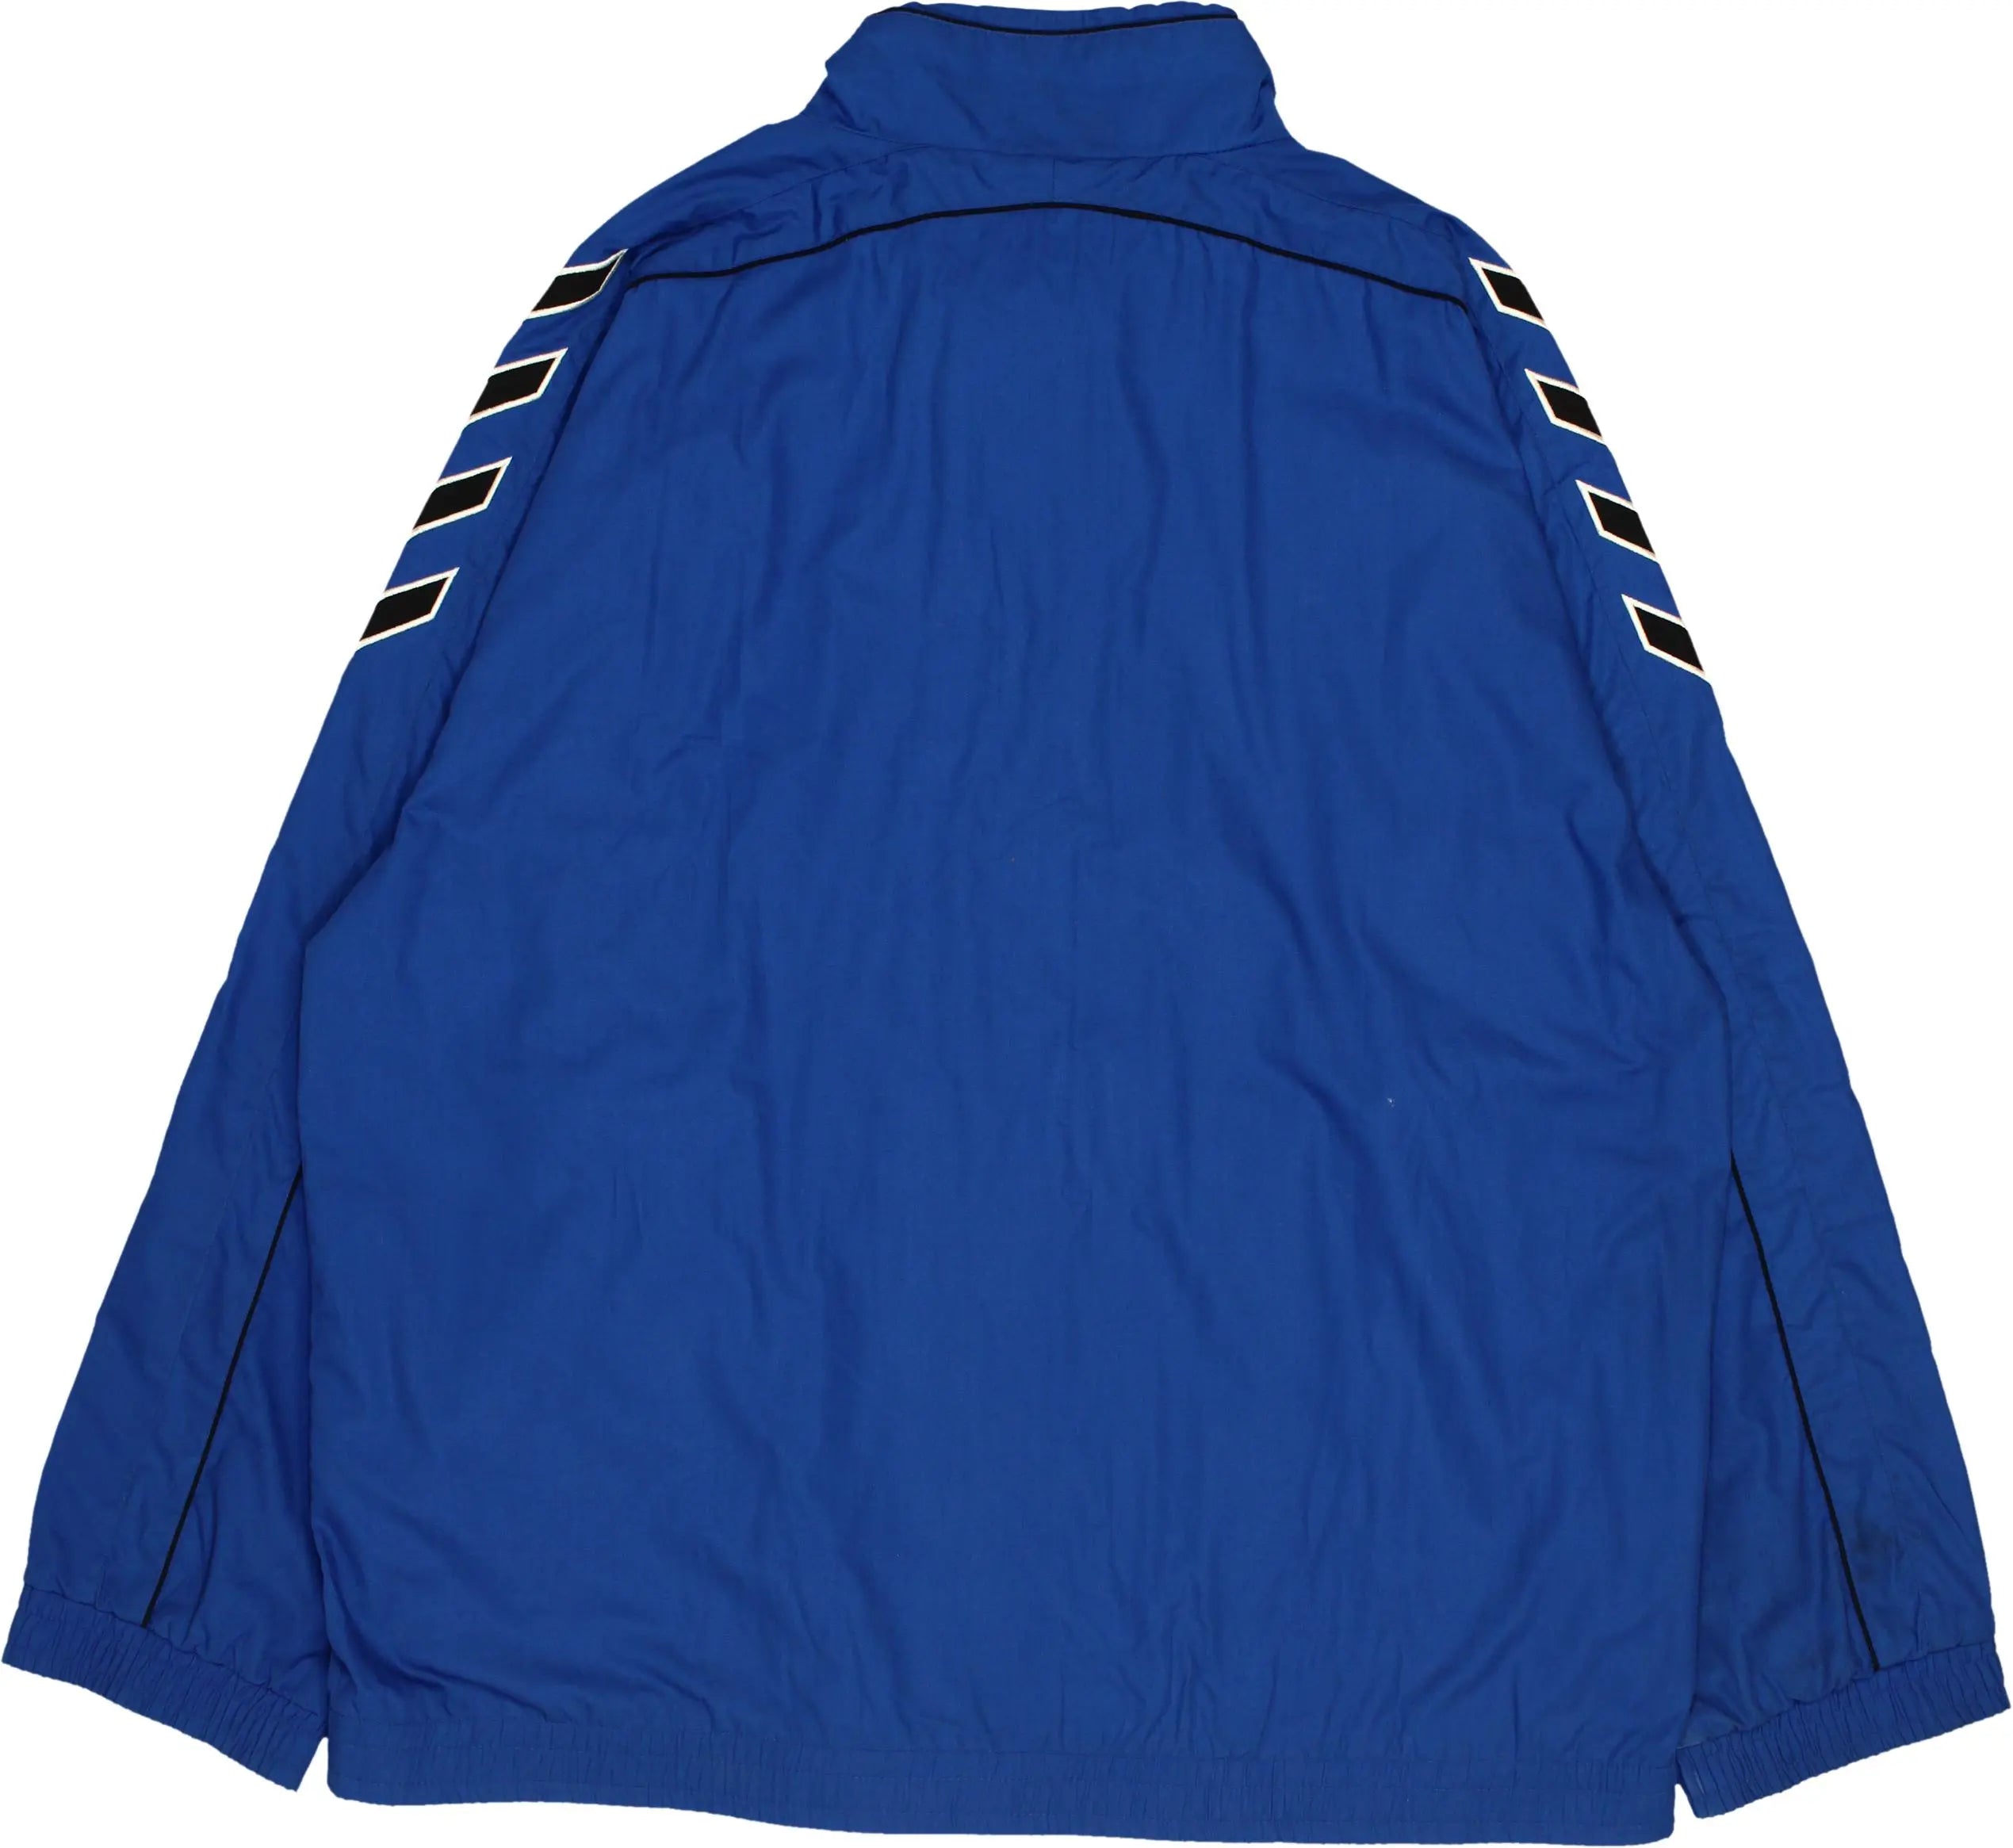 Hummel - Blue Track Jacket by Hummel- ThriftTale.com - Vintage and second handclothing